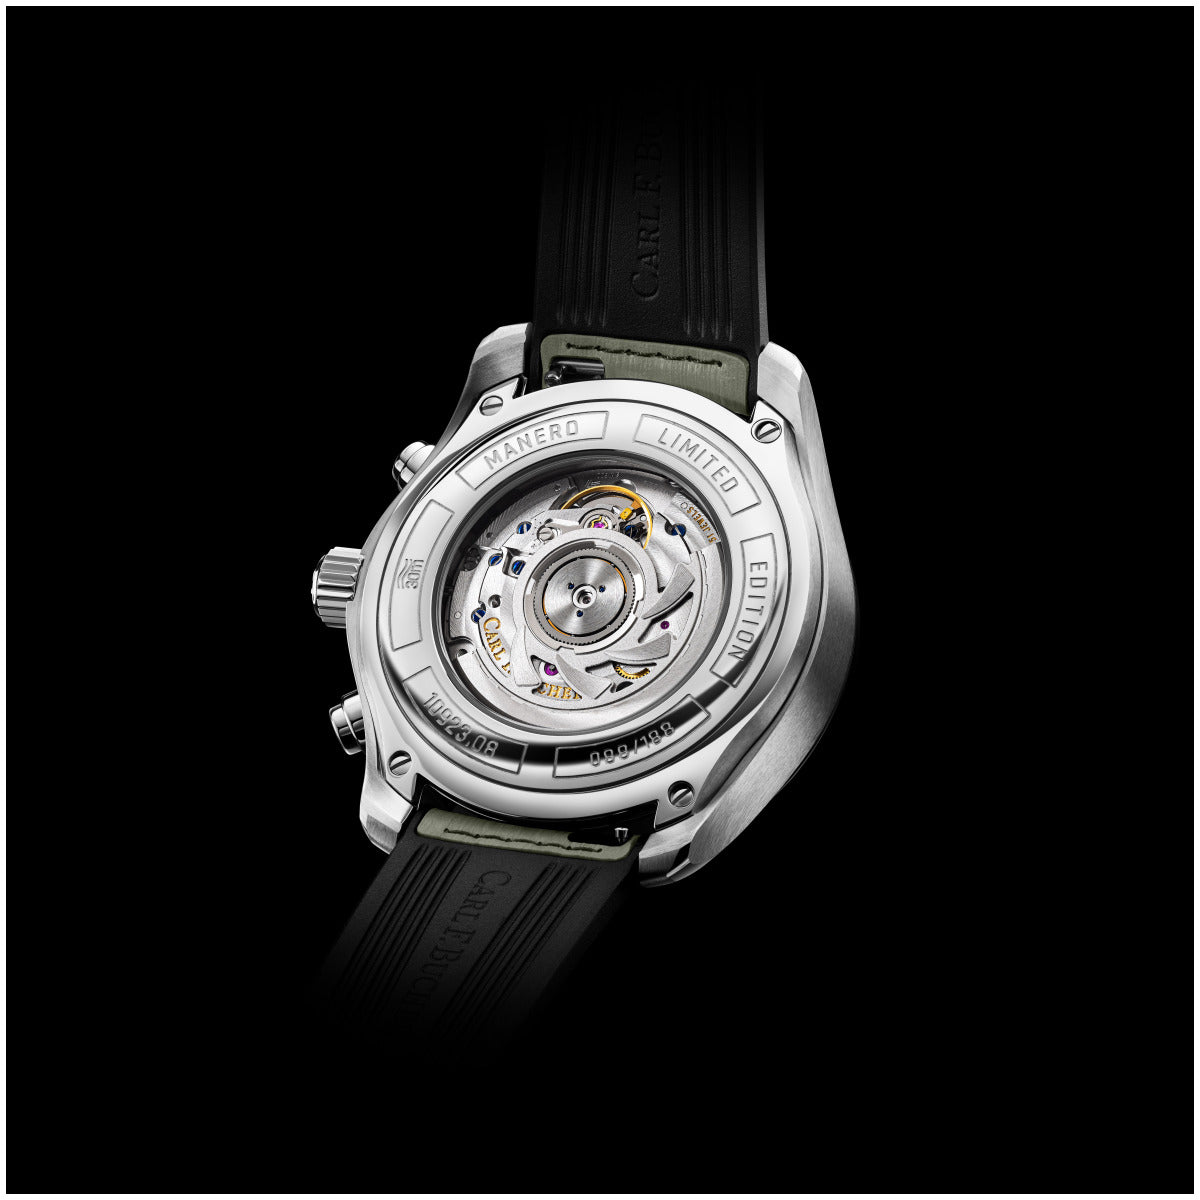 Carl F. Bucherer Manero Chronograph Stainless steel Limited Edition Men's Watch